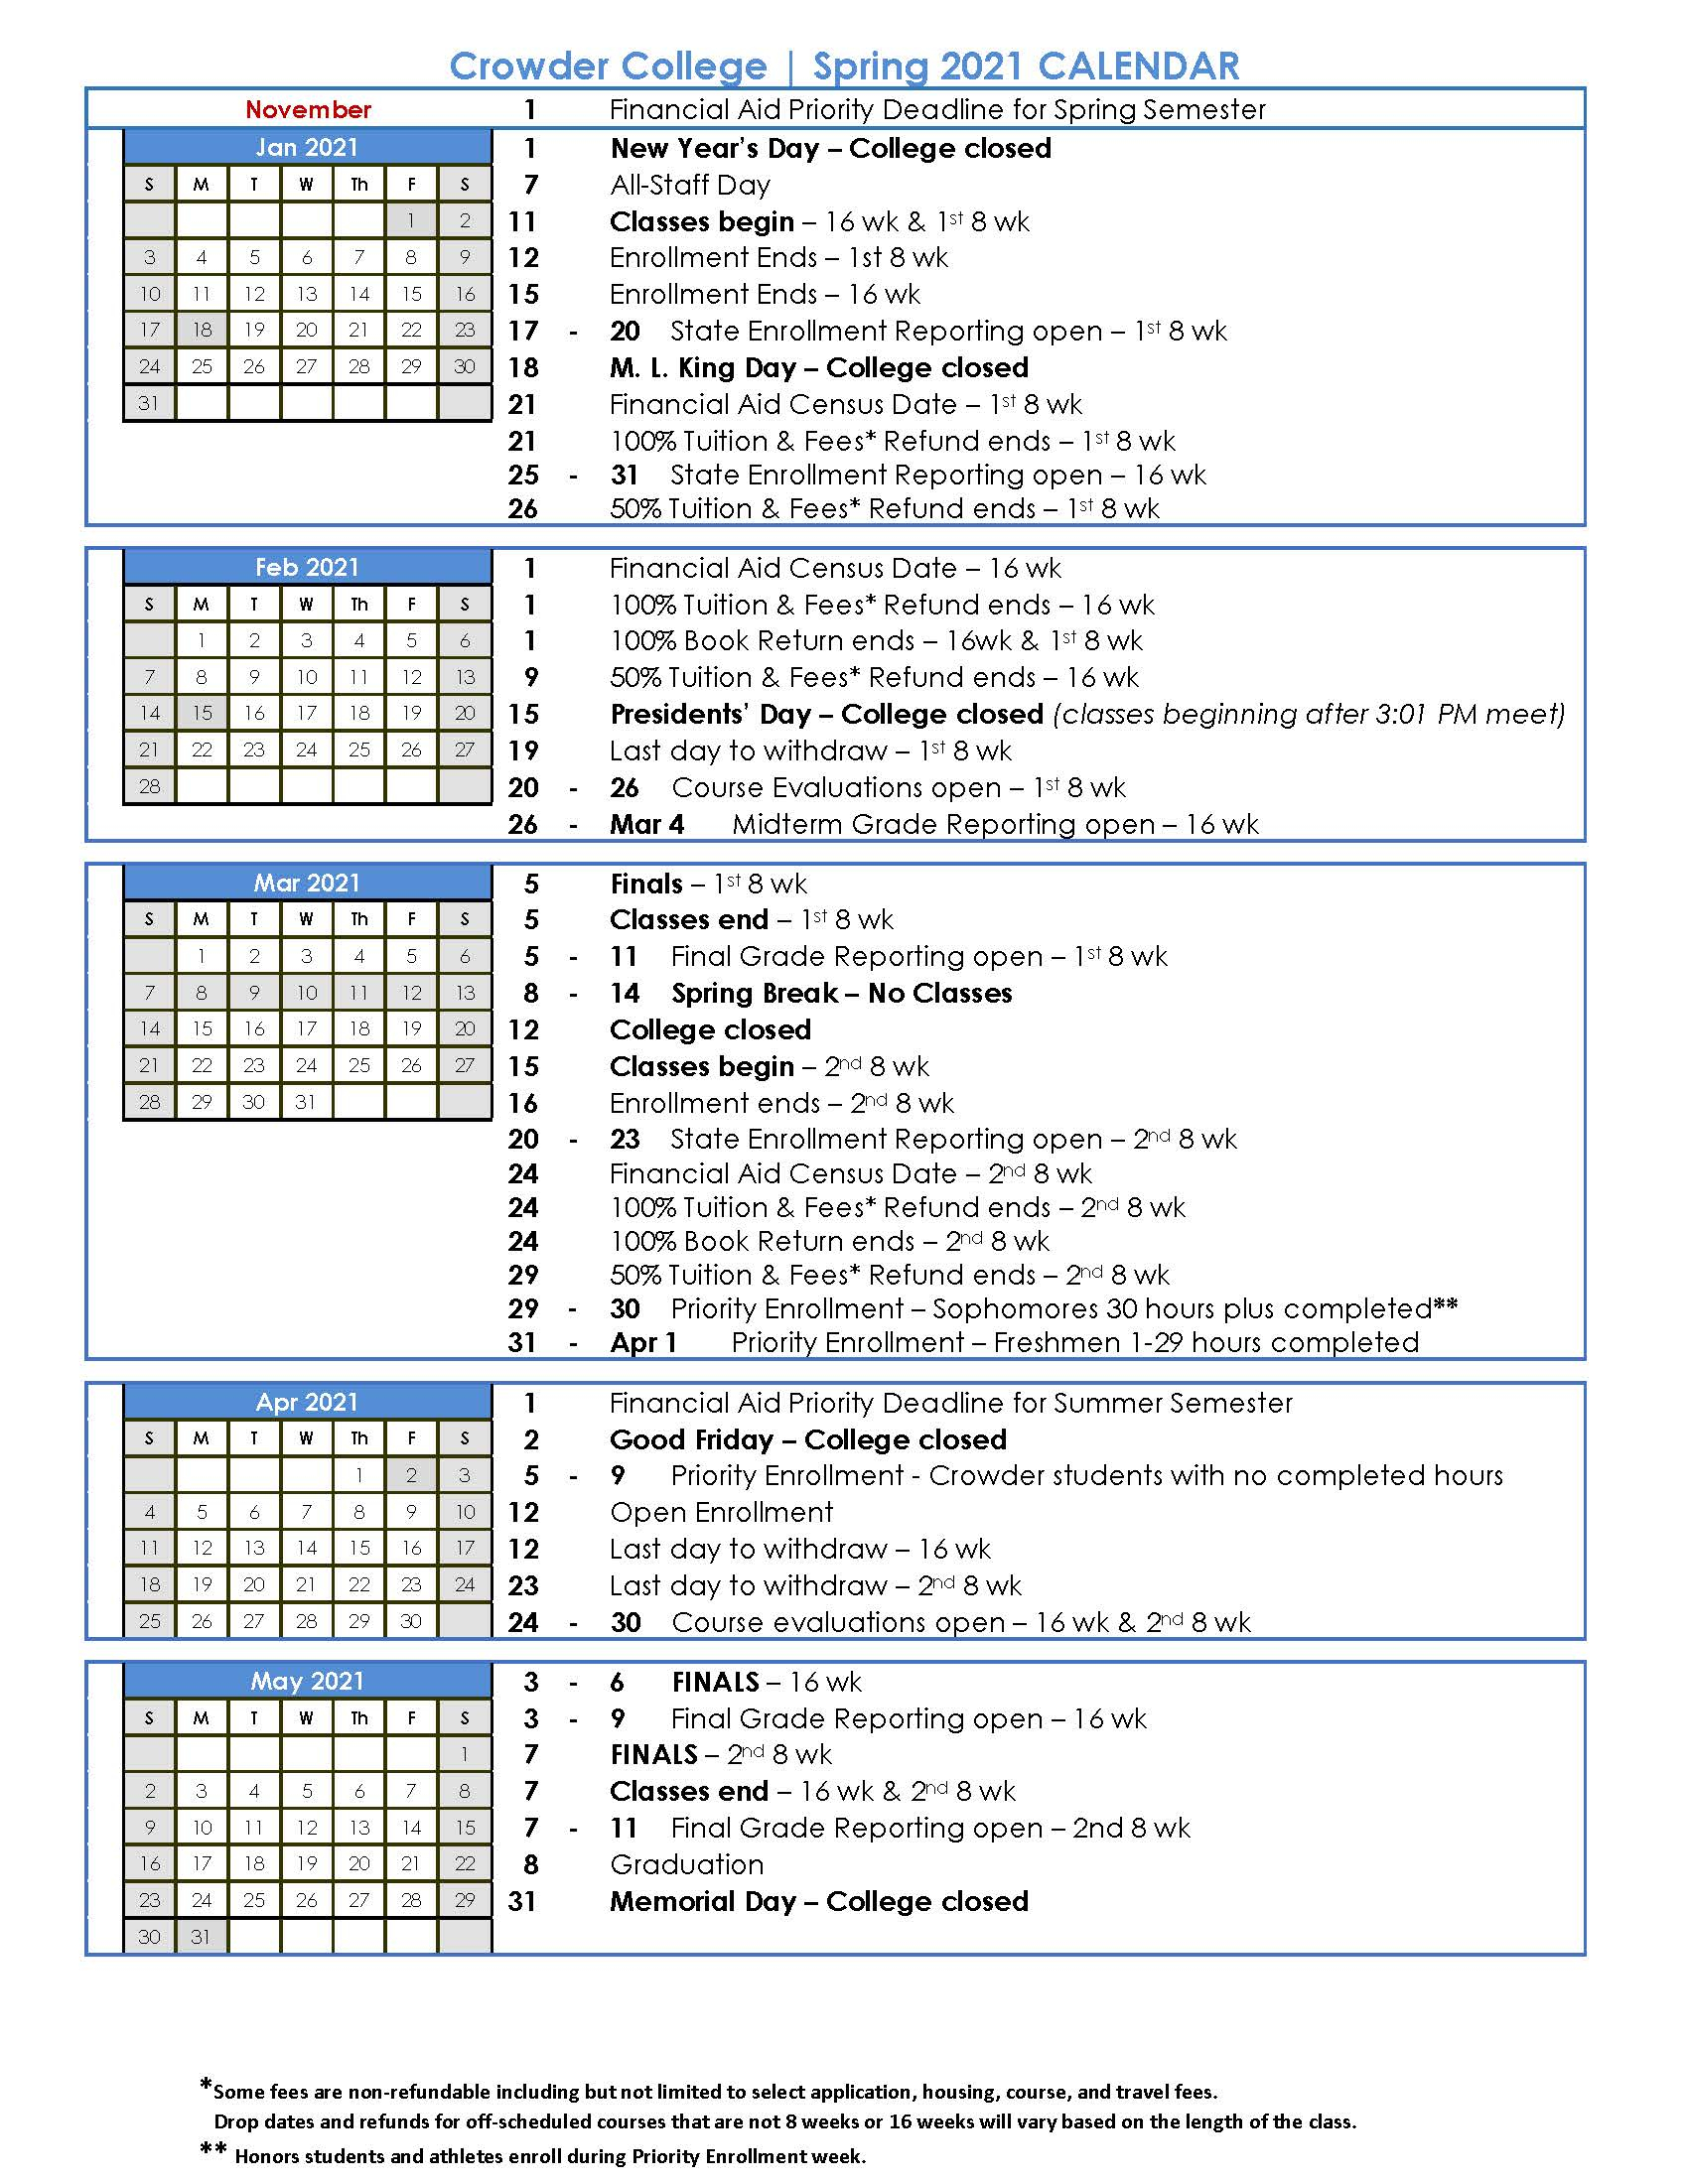 Ud Academic Calendar 2022 23 Printable Calendar 2023